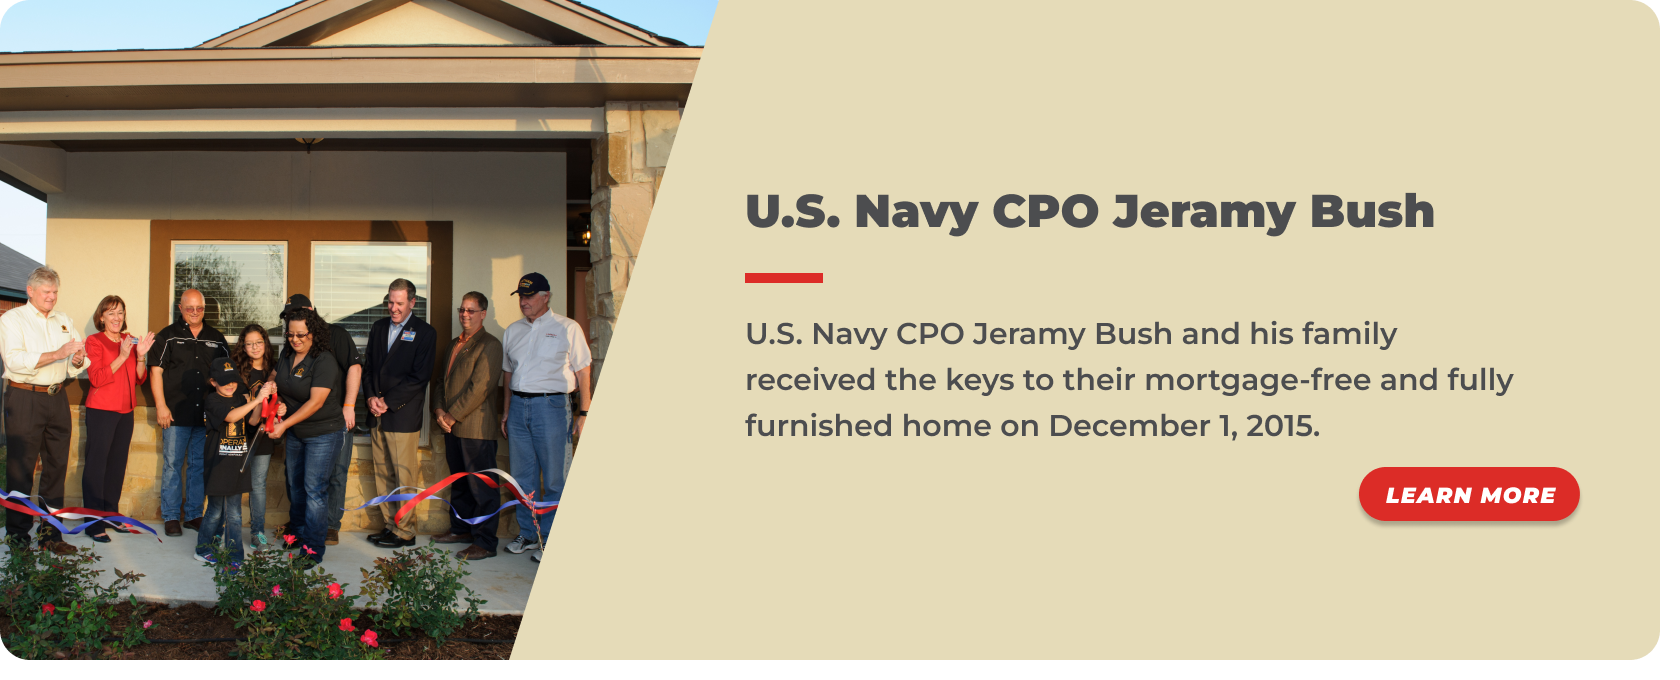 9 -U.S. Navy CPO Jeramy Bush